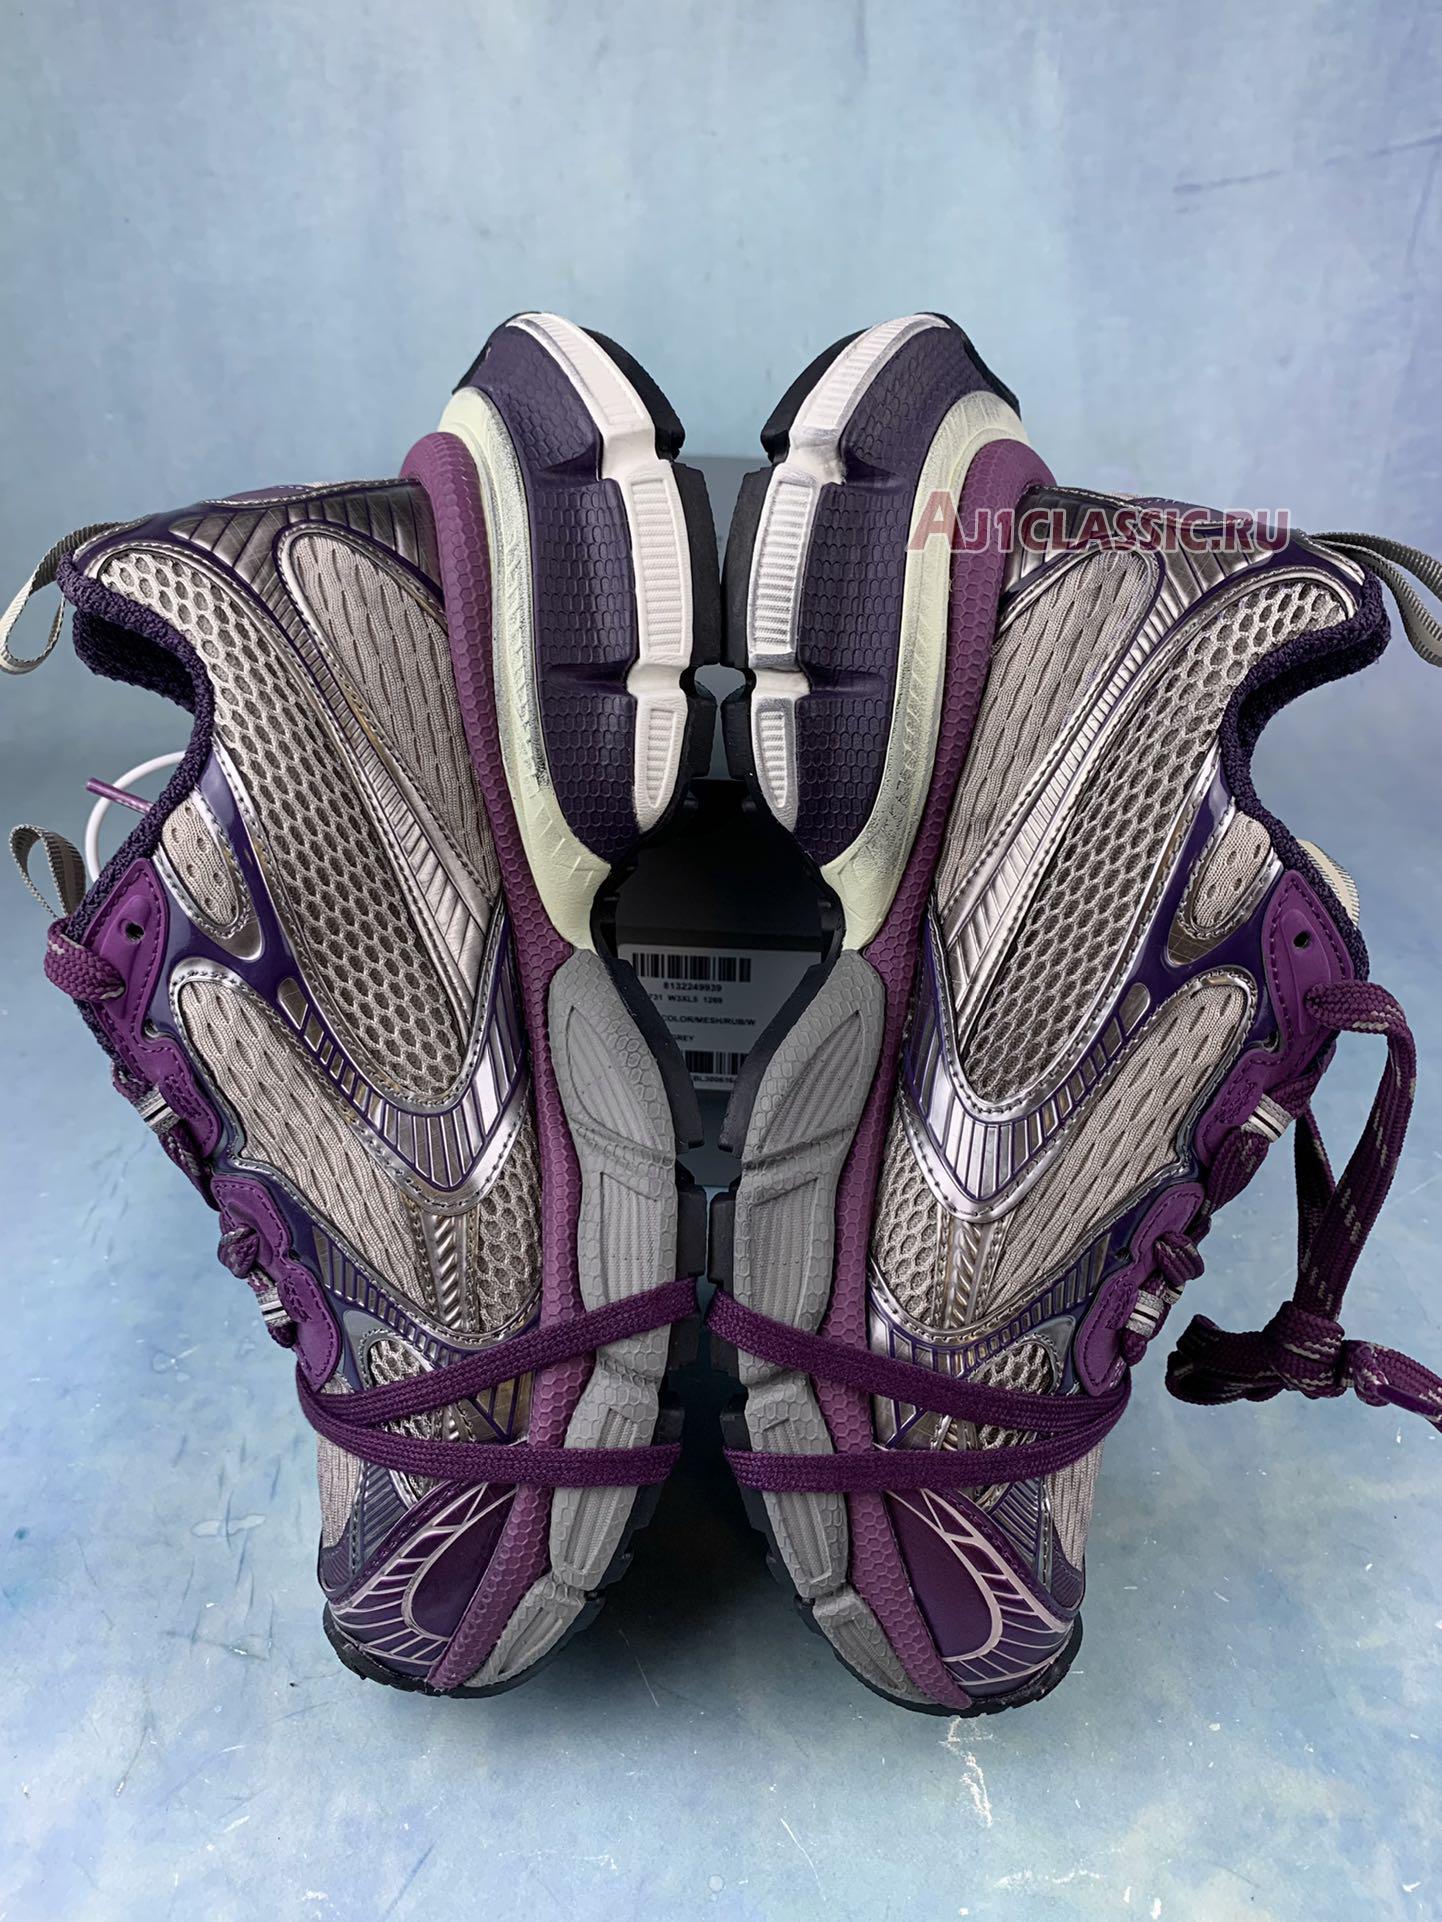 Balenciaga 3XL Sneaker "Purple Grey" 734731 W3XL5 1269